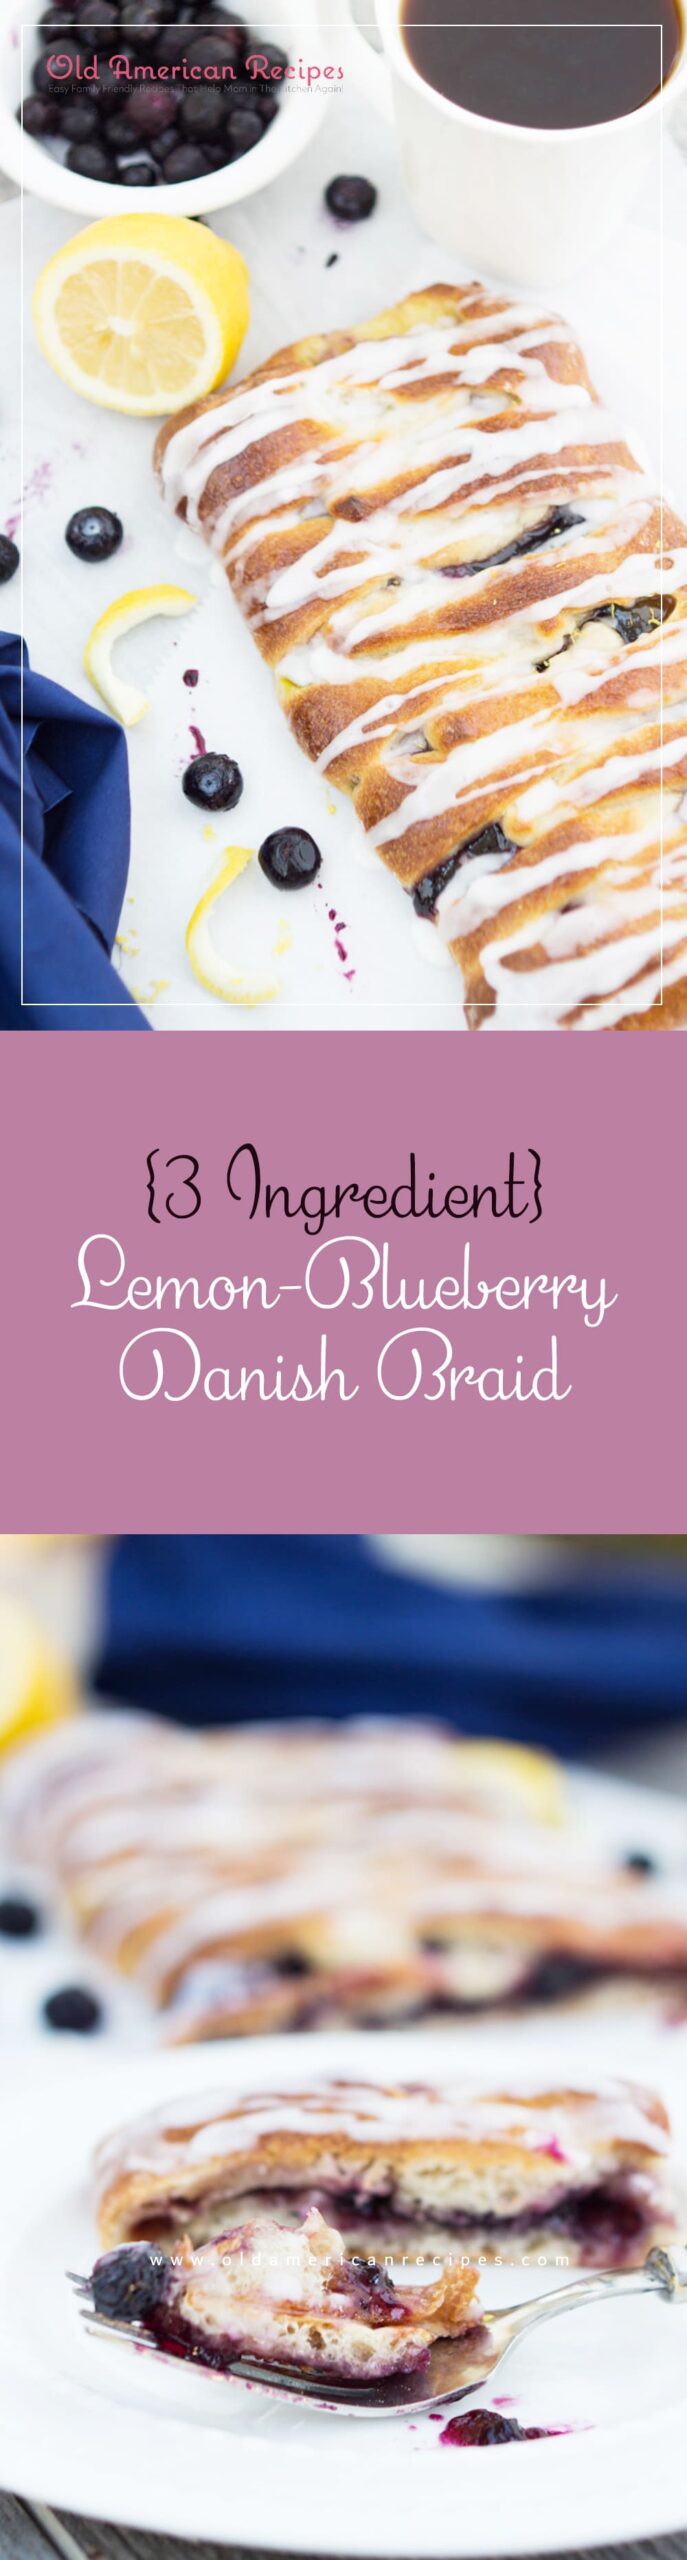 {3 Ingredient} Lemon-Blueberry Danish Braid